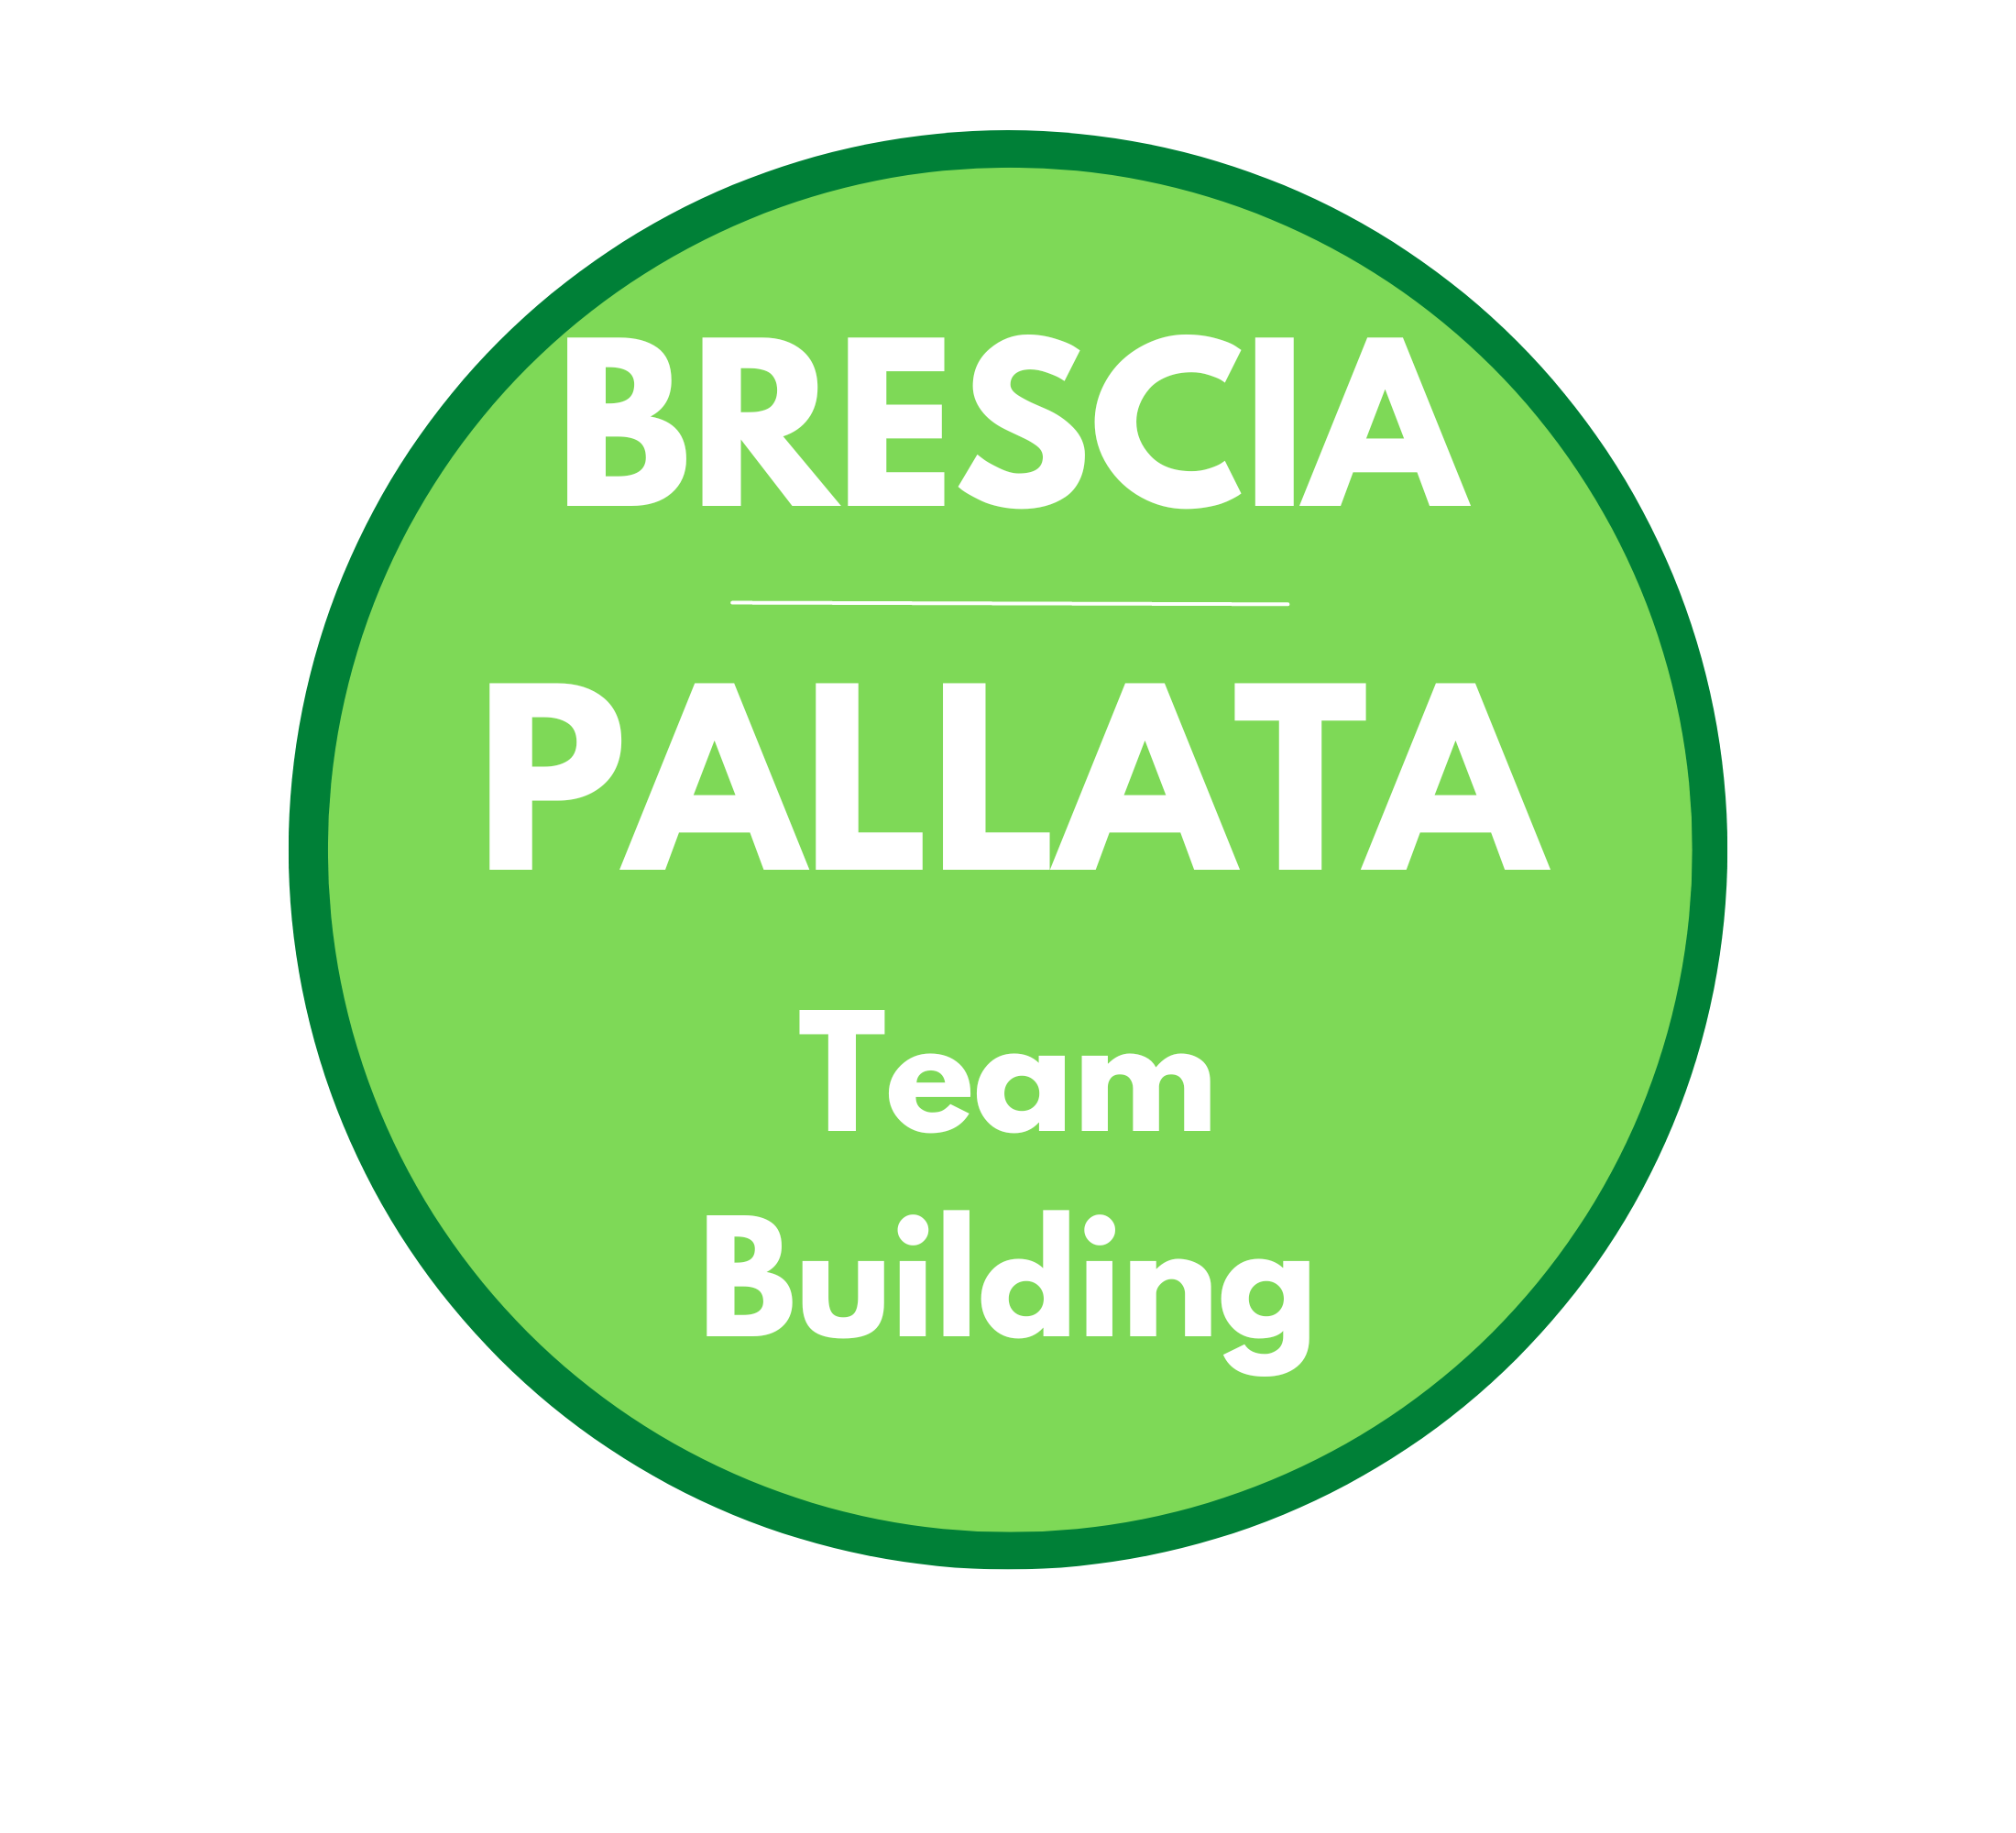 City Escape Brescia - Team Building